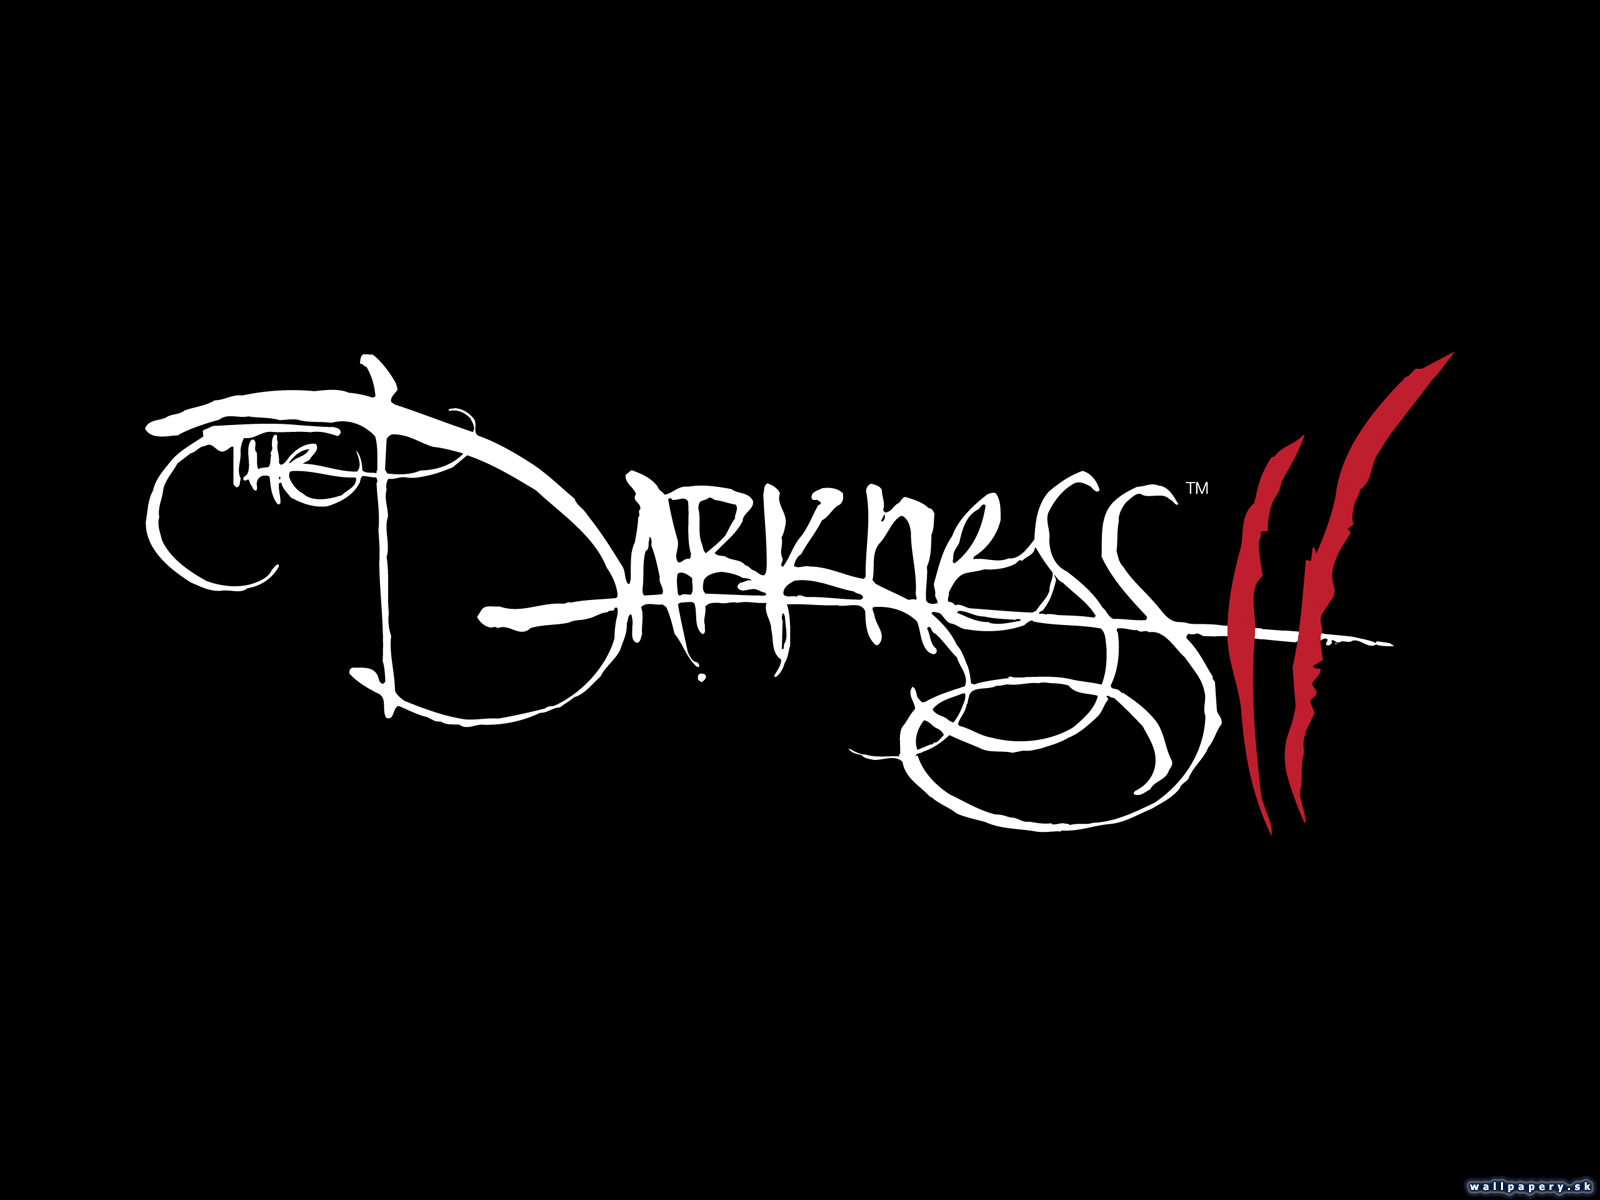 The Darkness II - wallpaper 3